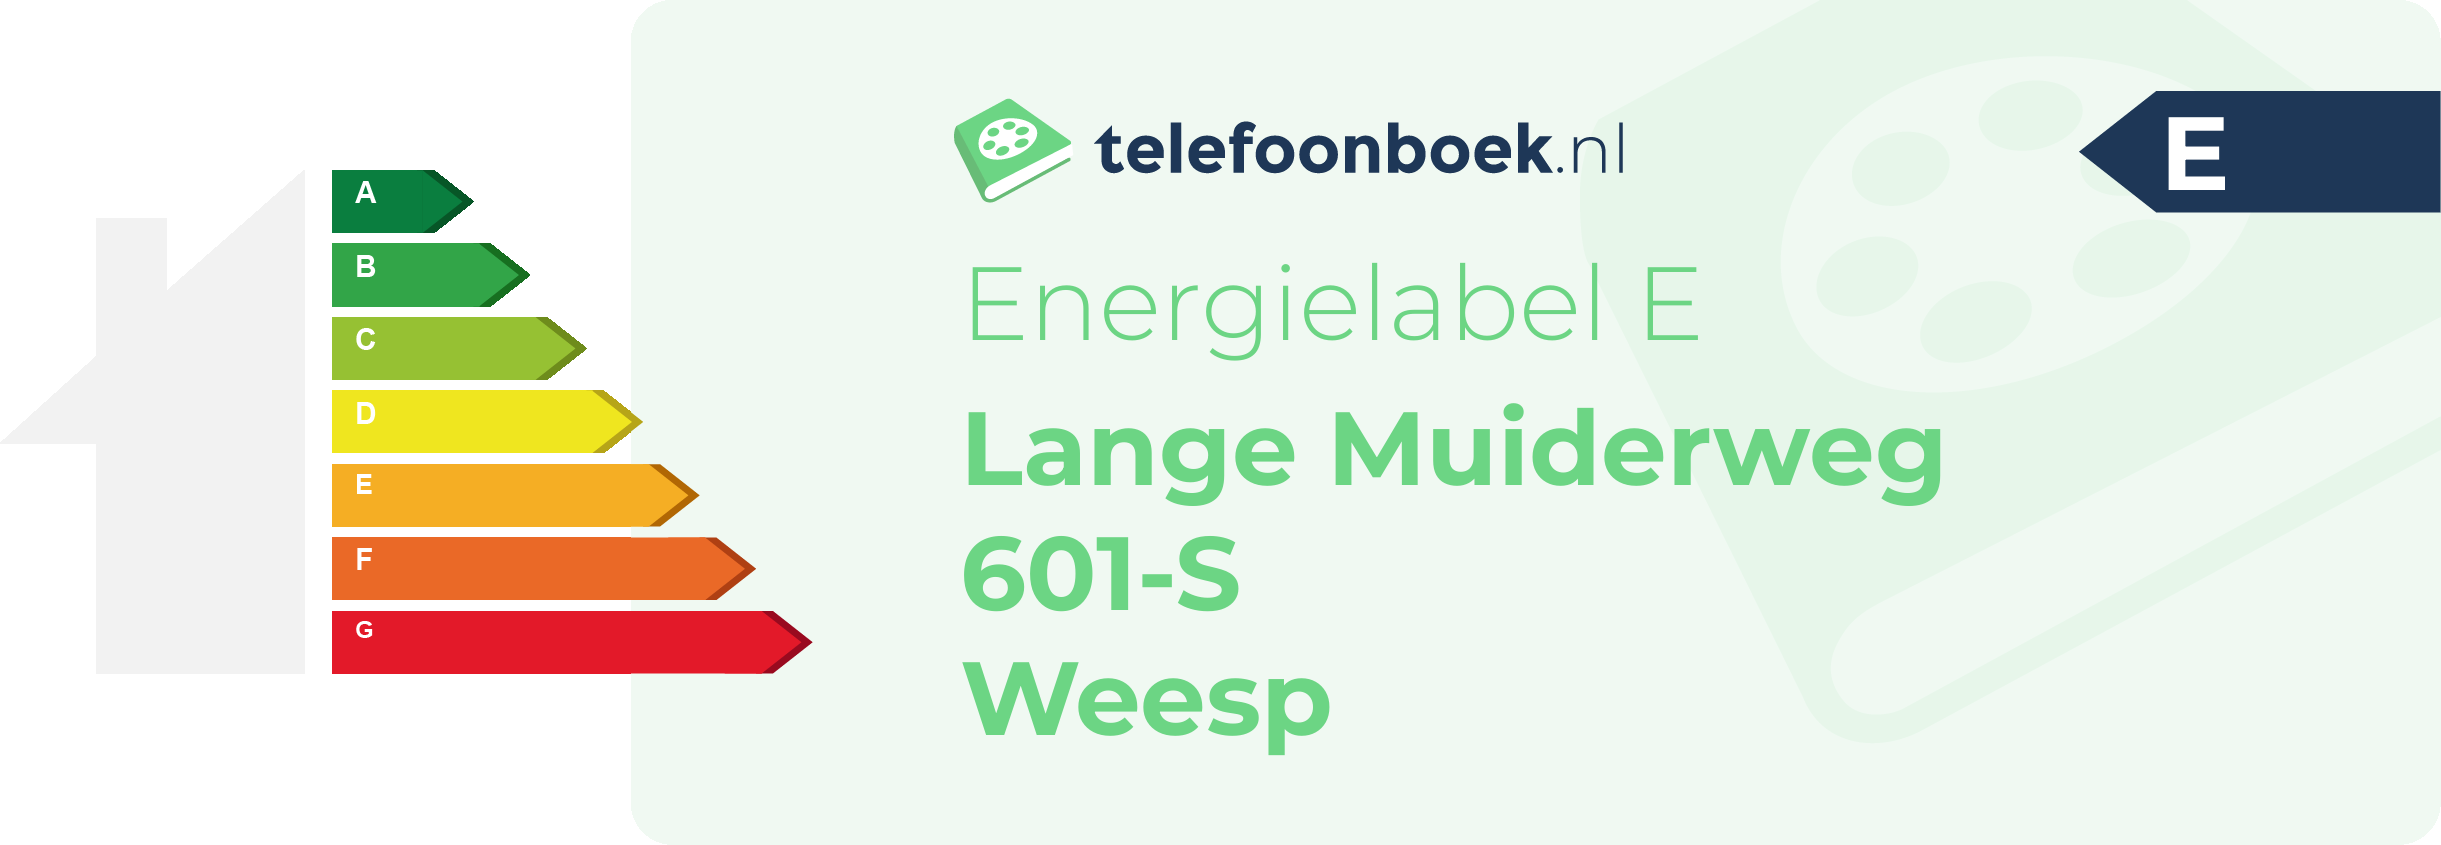 Energielabel Lange Muiderweg 601-S Weesp